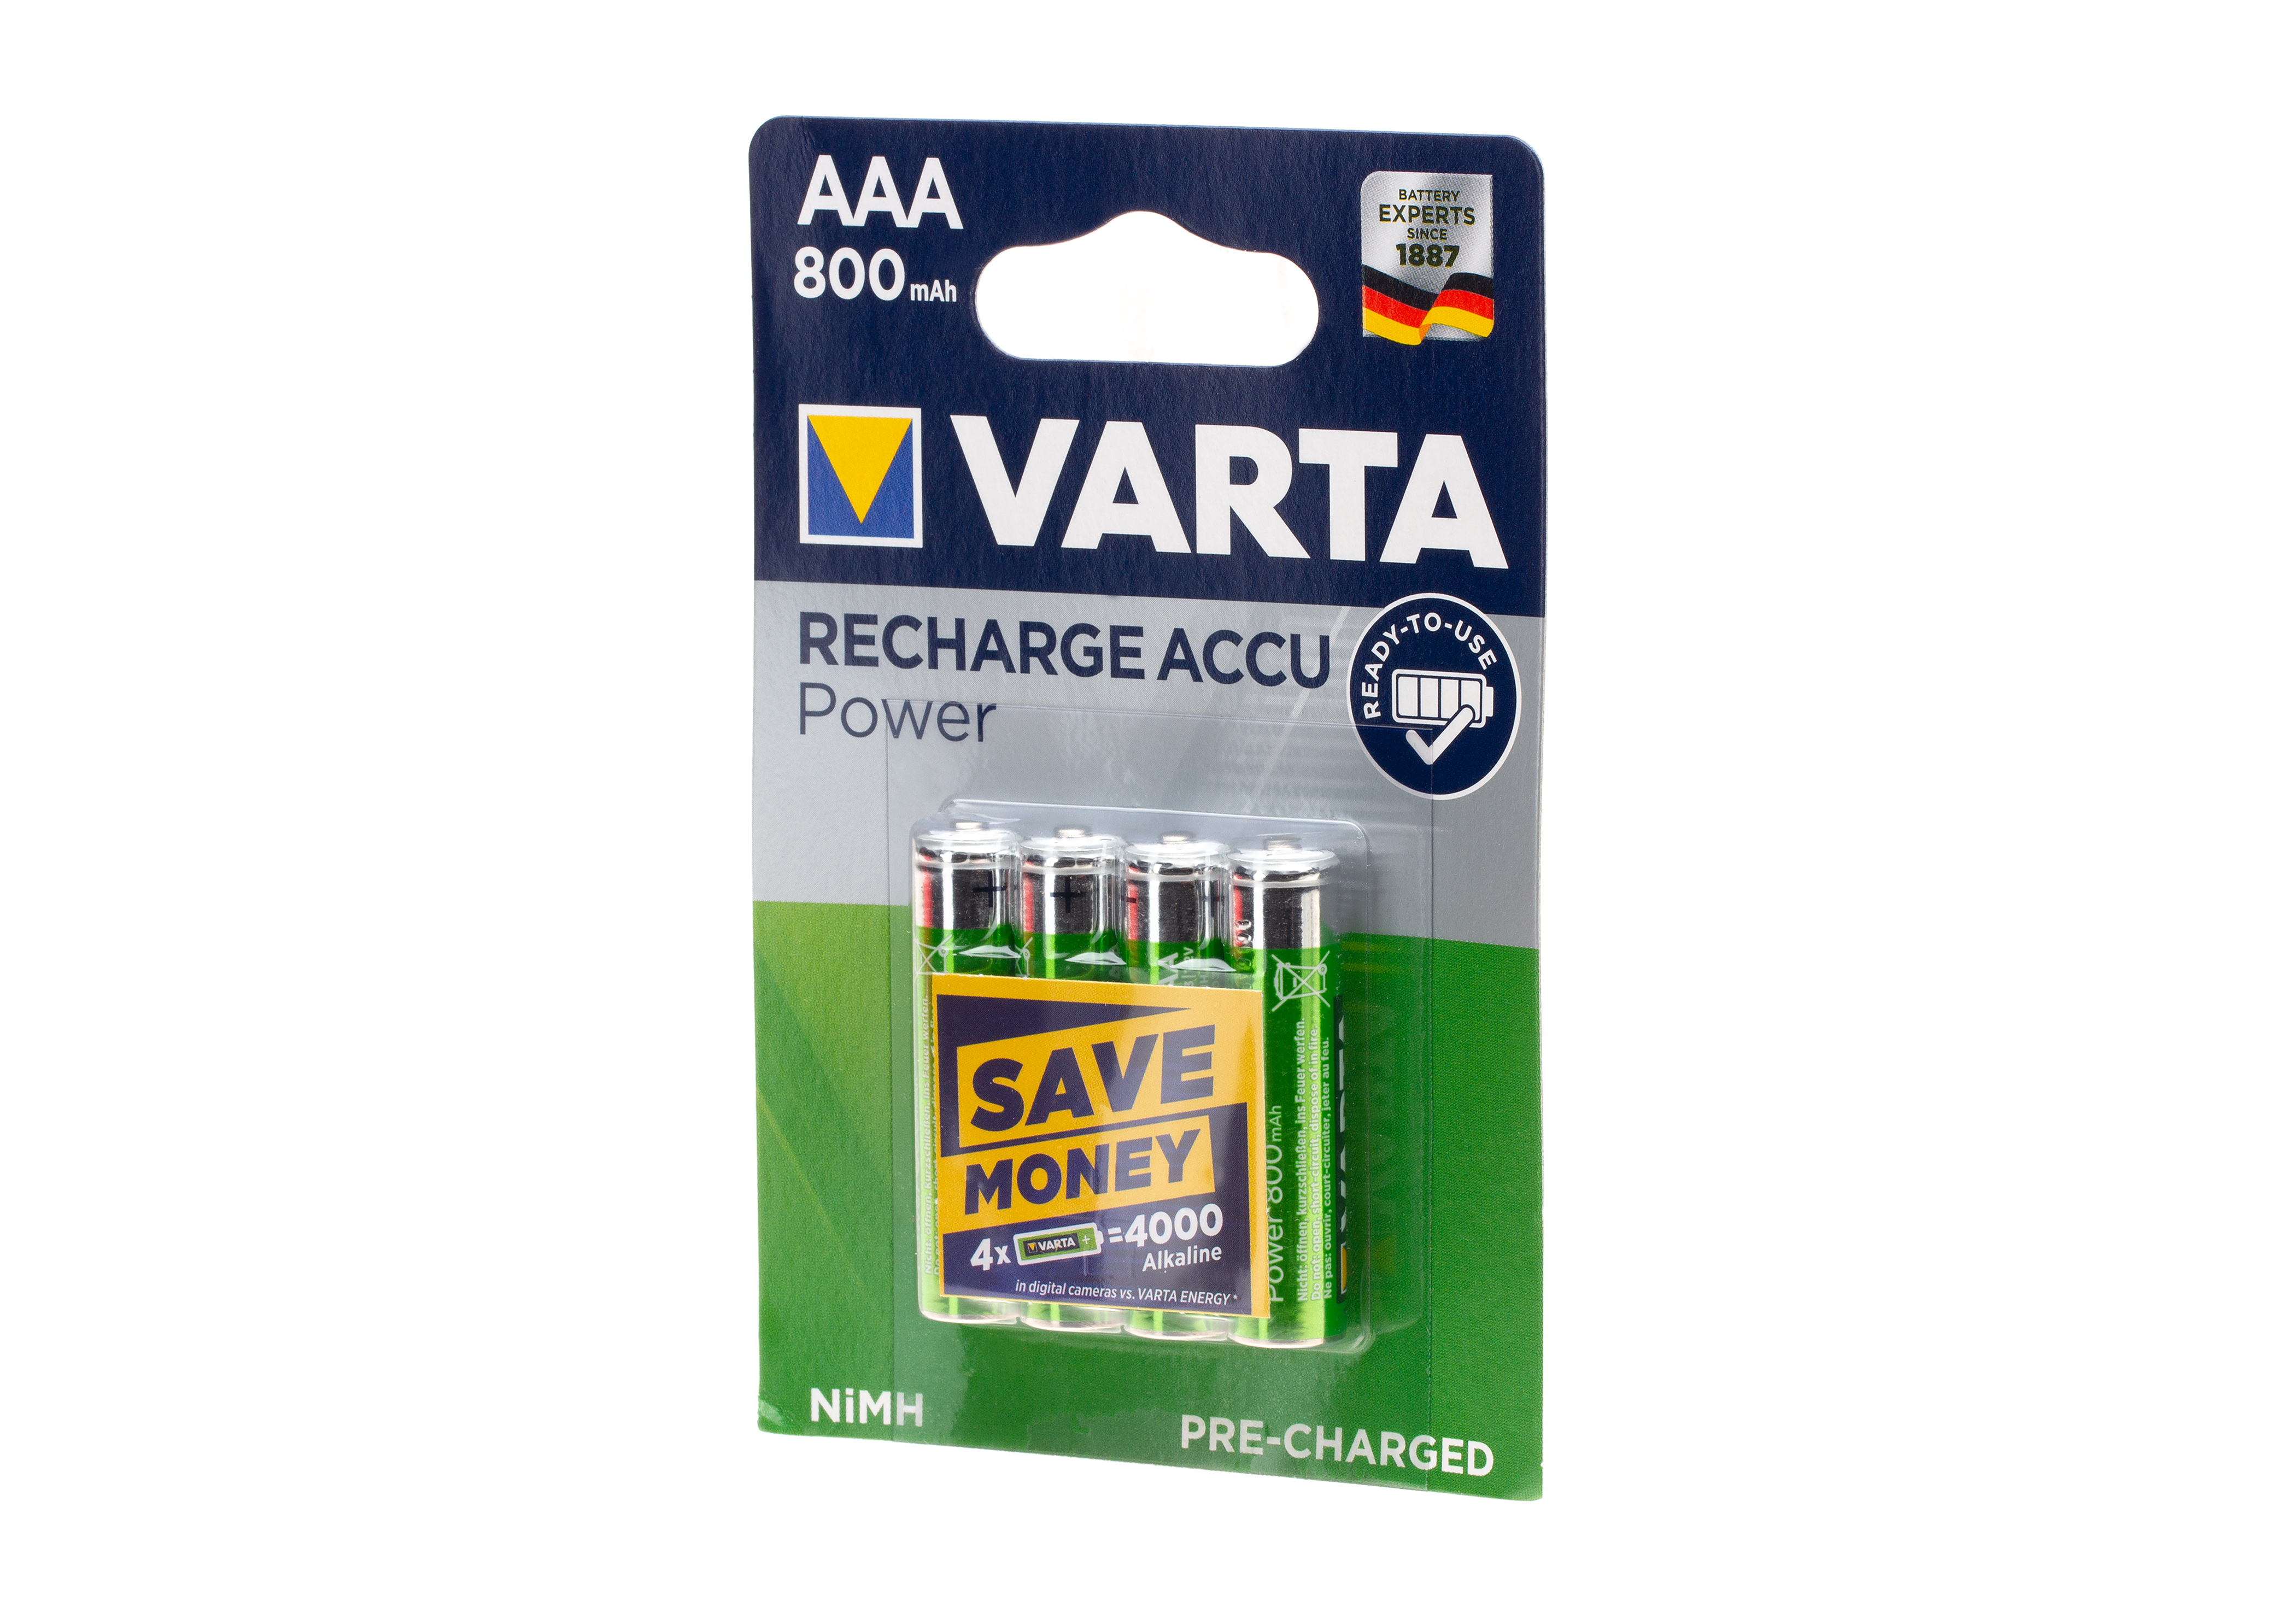 Rechargeable batteries AAA Varta Accu 800mAh